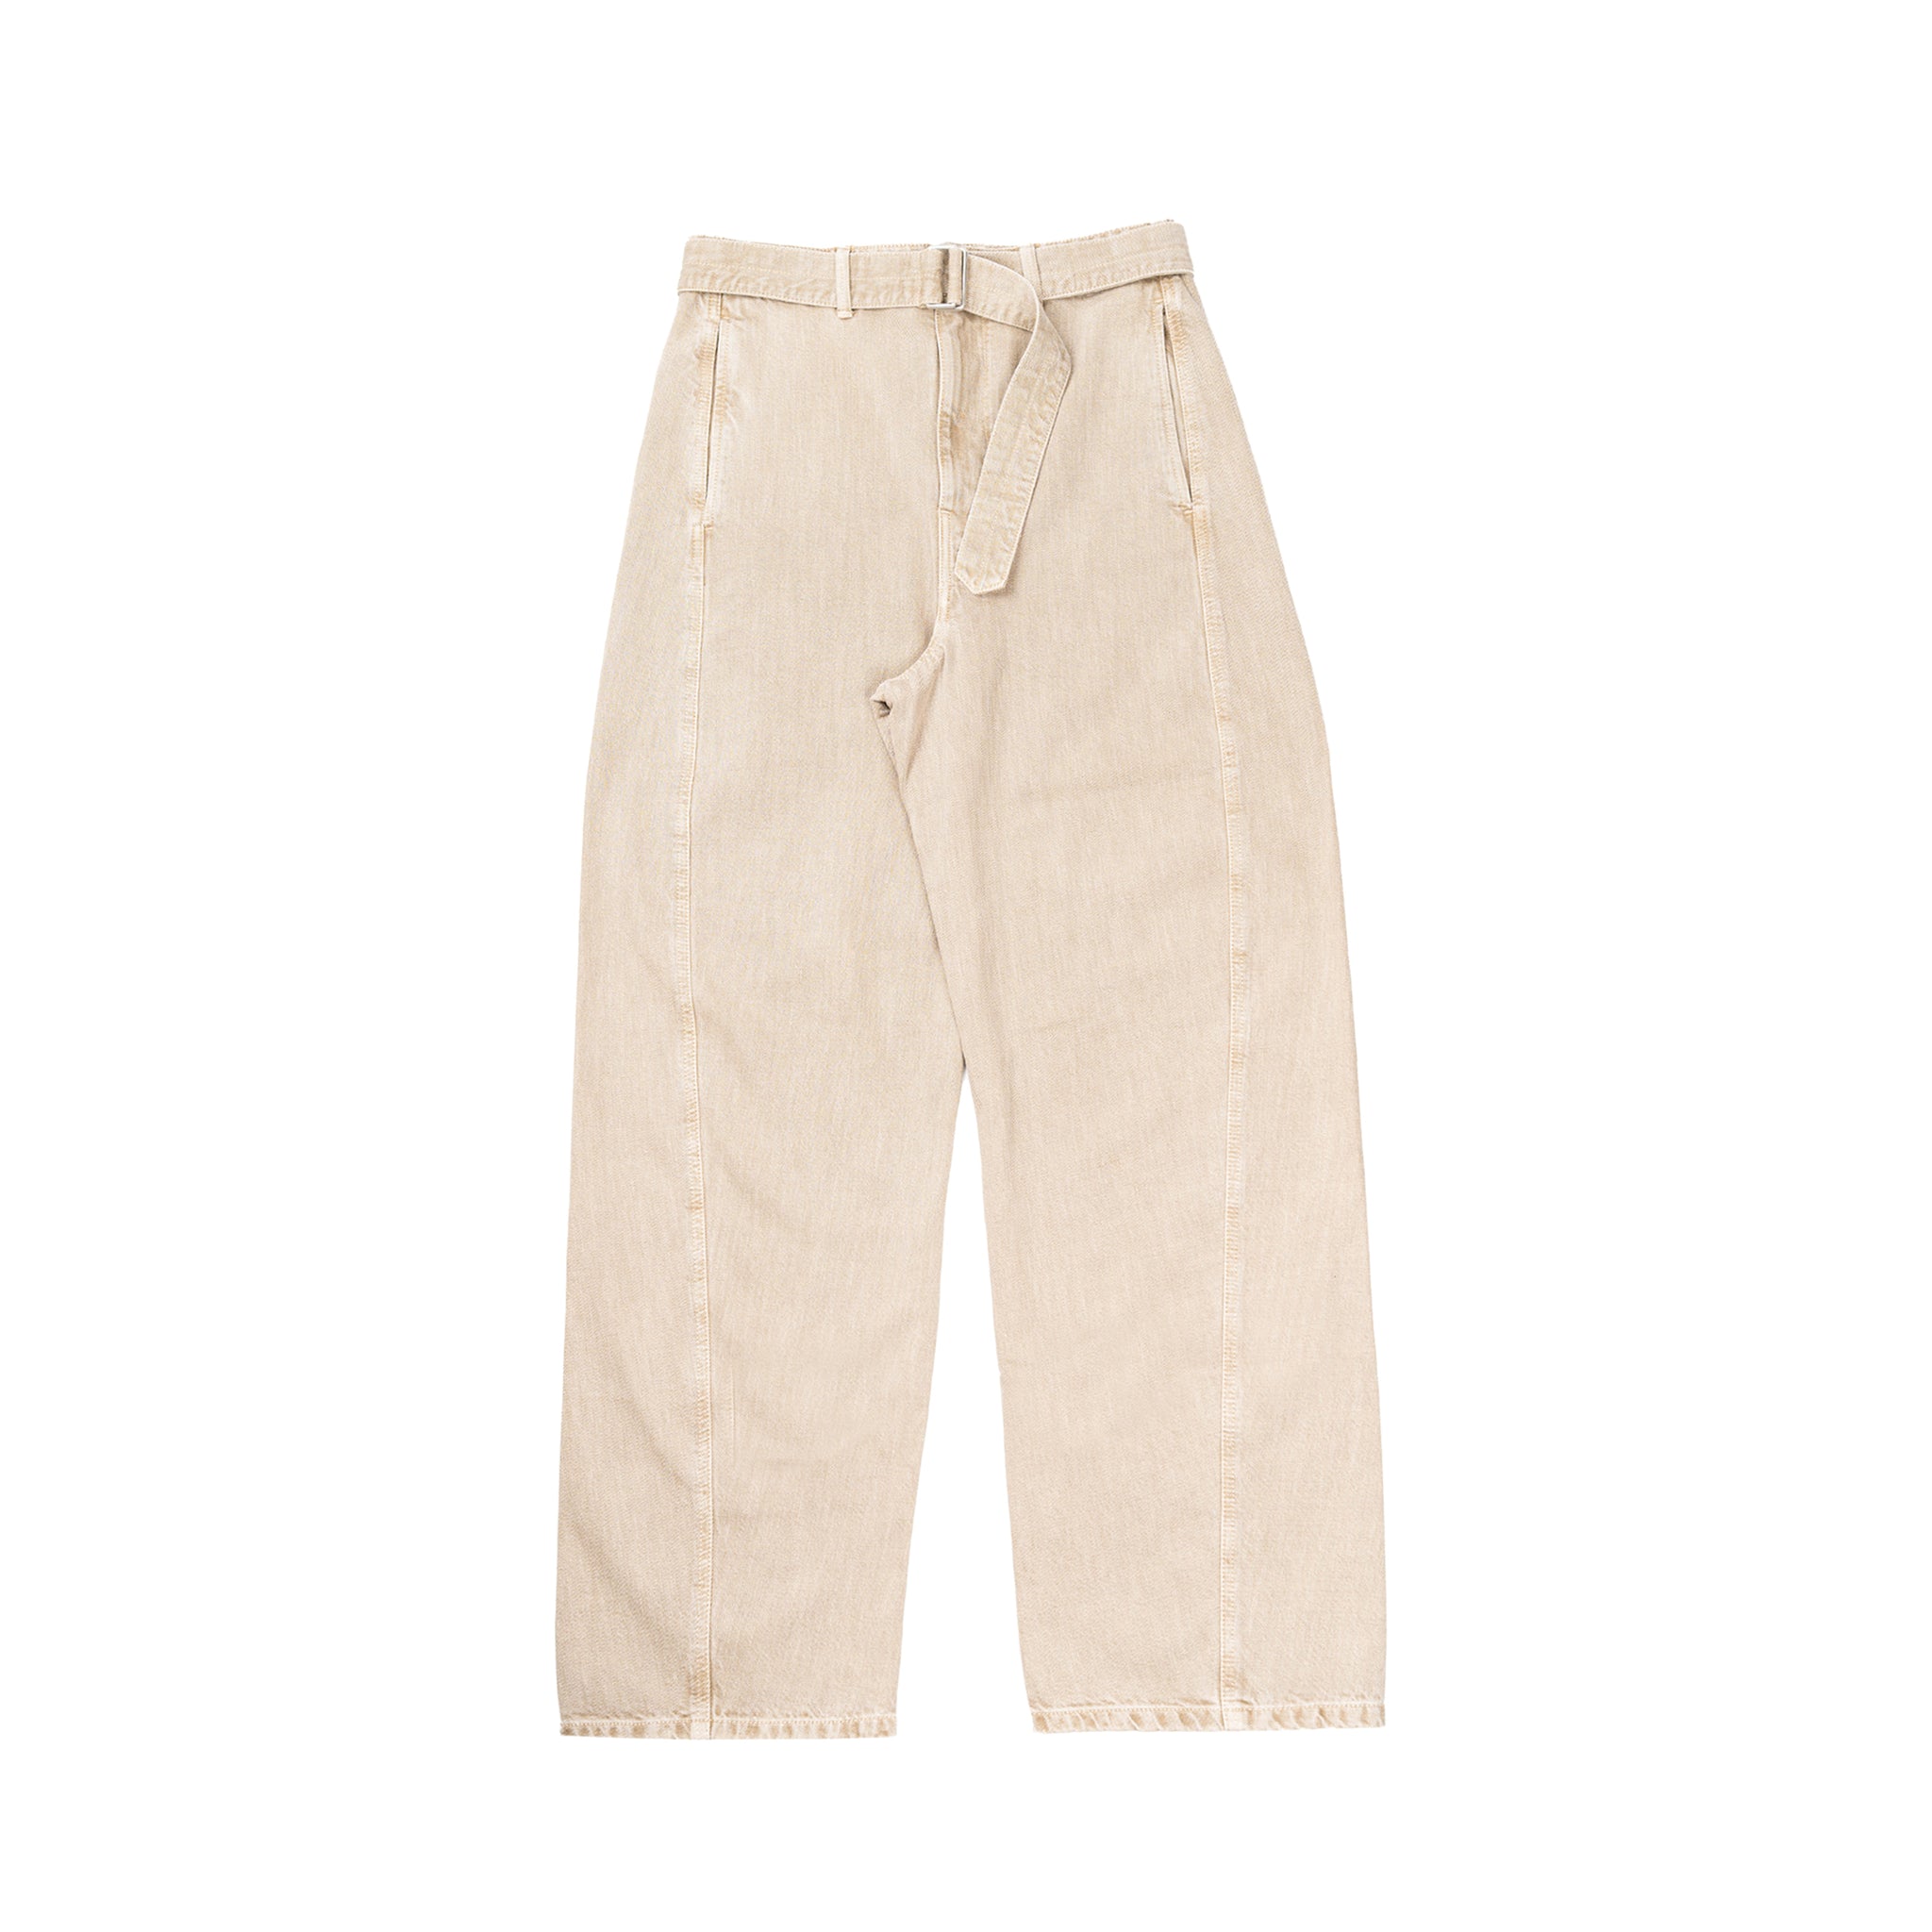 Twisted pantalone con cintura in beige